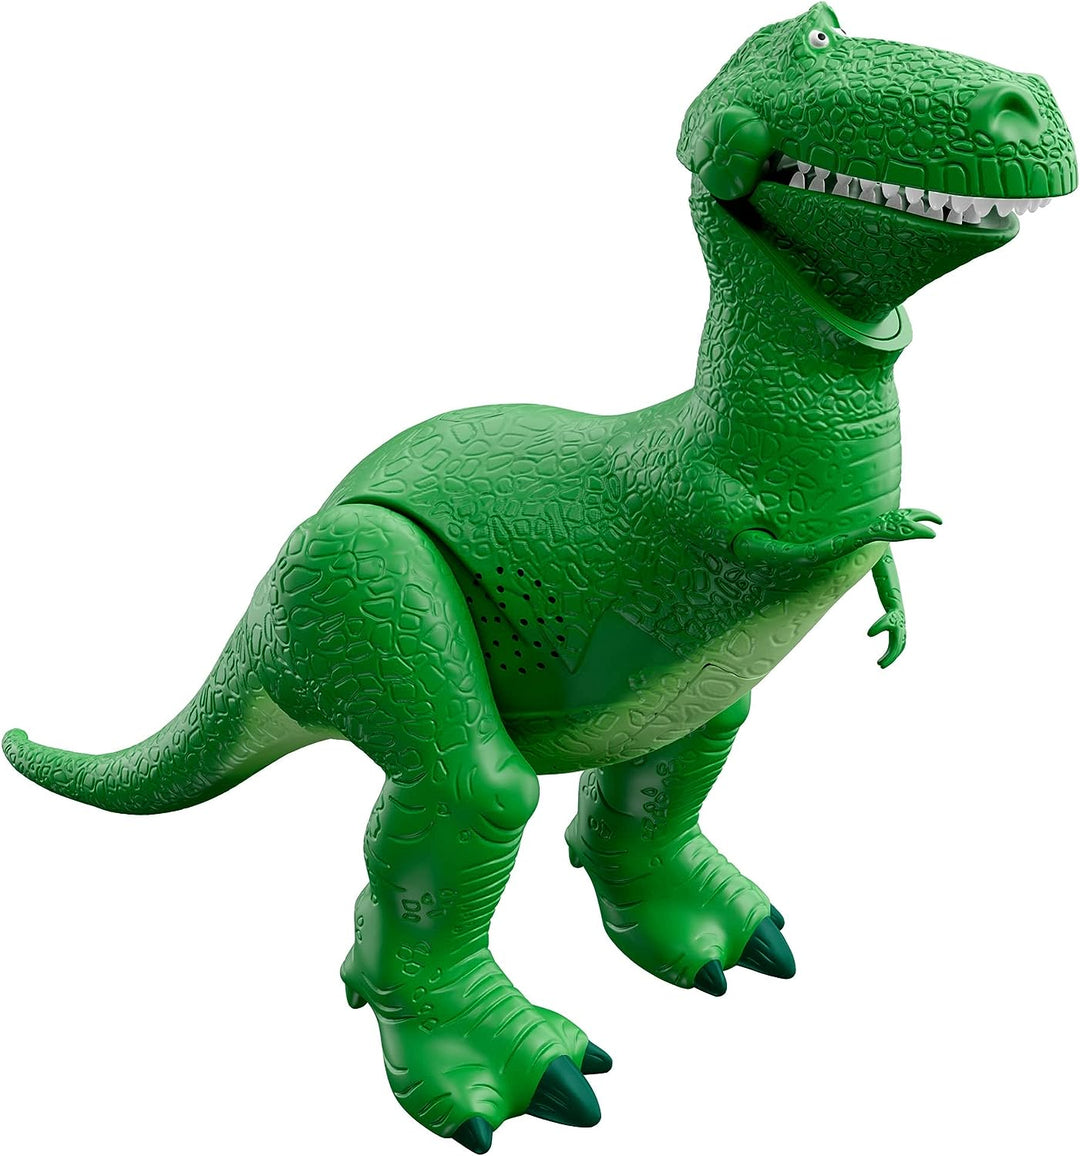 Disney Pixar Toy Story Toys, Moving & Talking Rex Dinosaur Figure, Roarin’ Laughs